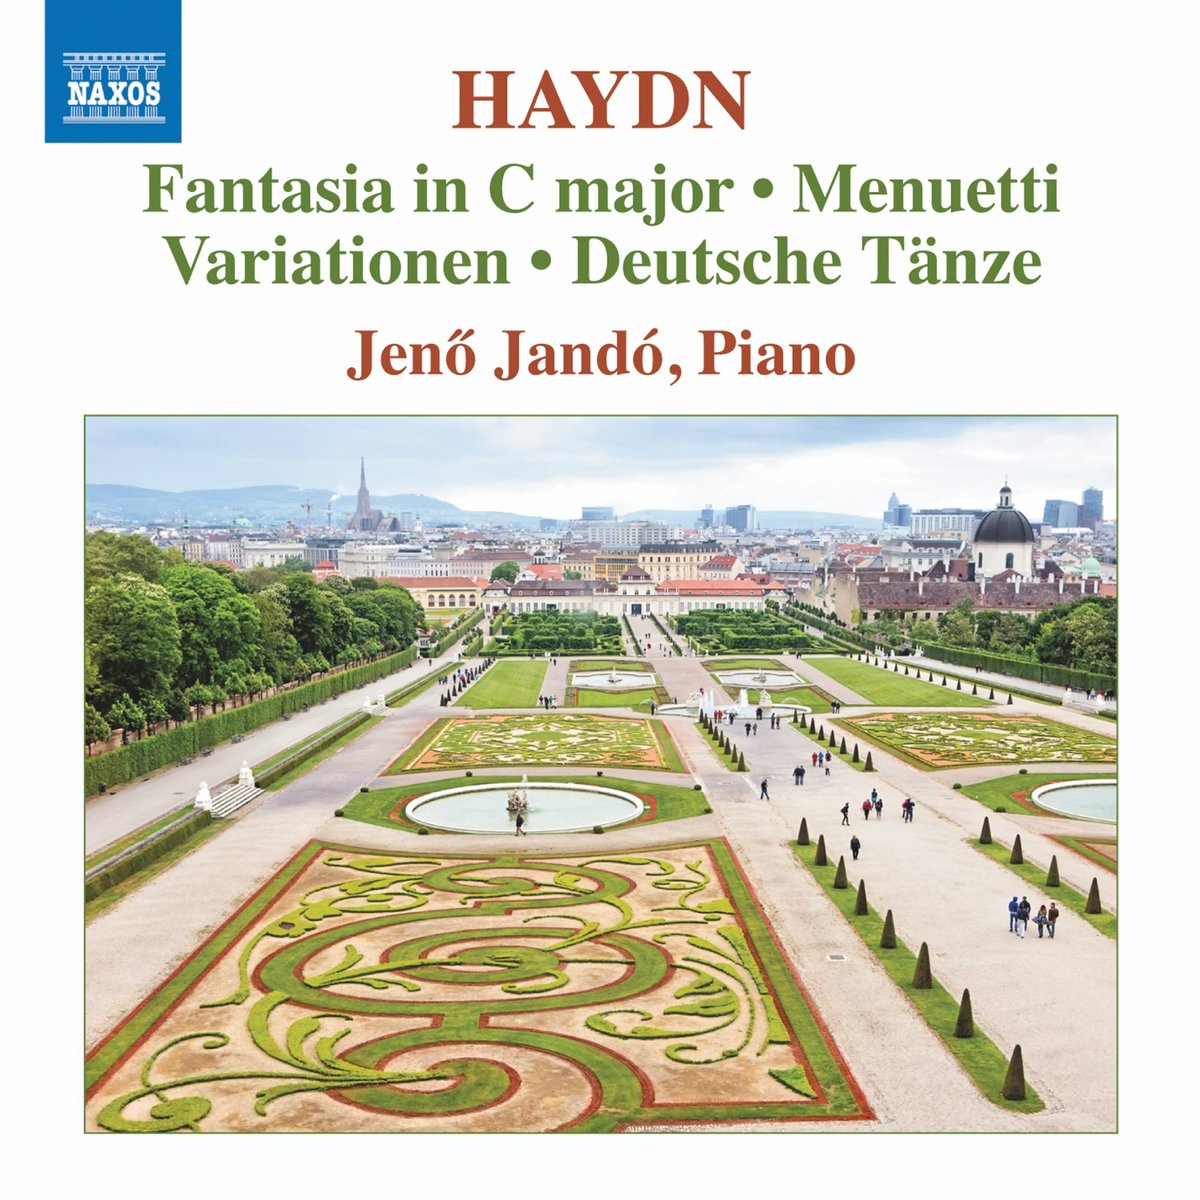 #HaydnGuild New December 2018: @ChandosRecords @naxosrecords Great #JenőJandó presents his latest #Haydn CD Album: Haydn Works for Piano! #ff @HaydnSocGB @HaydnGuild @HaydnSocietyNA chandos.net/products/catal…